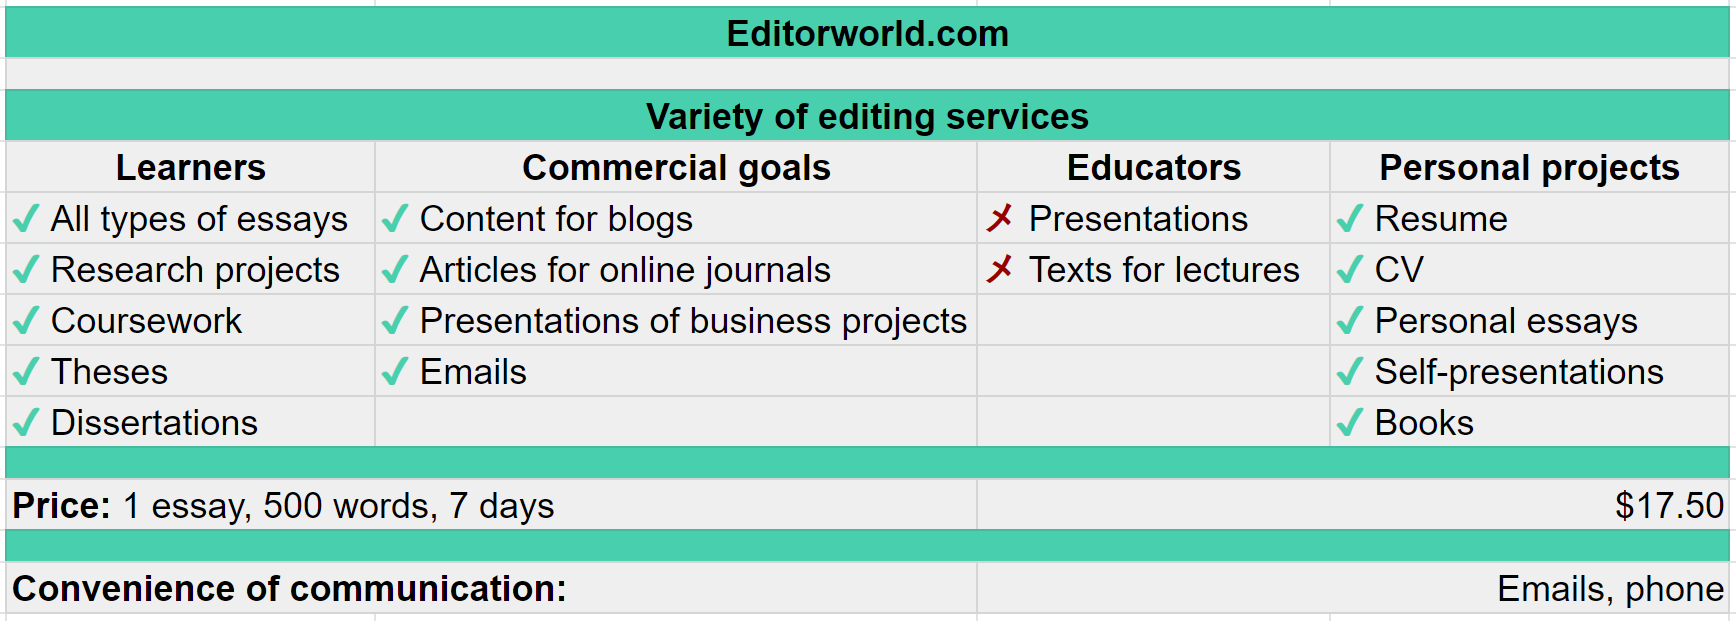 Editorworld.com